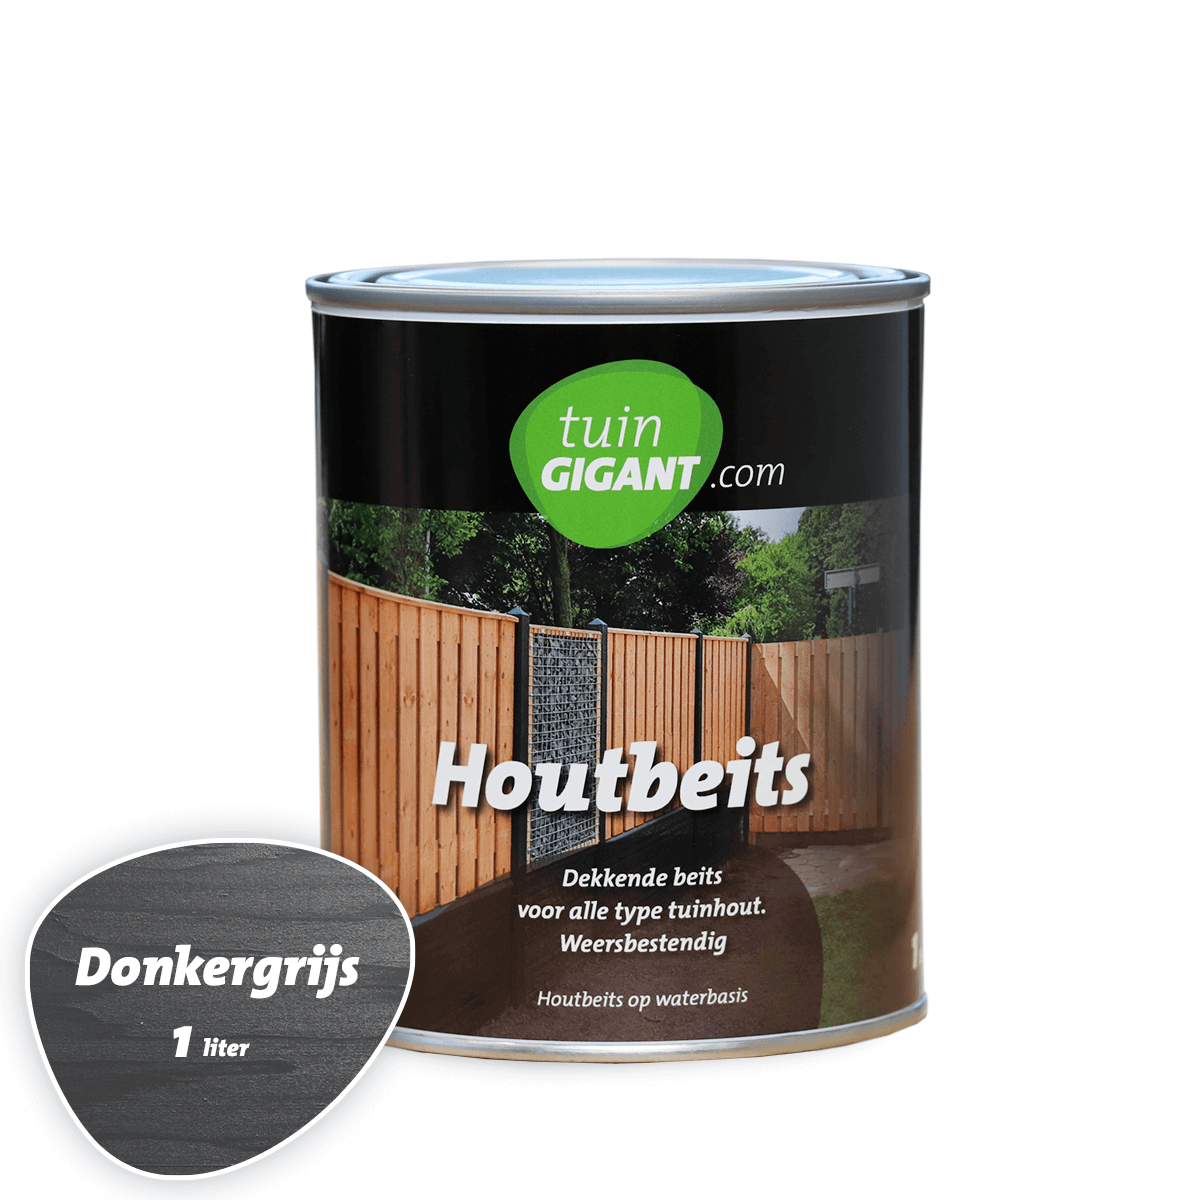 Houtbeits Donkergrijs - 1 2,5 Tuingigant.com